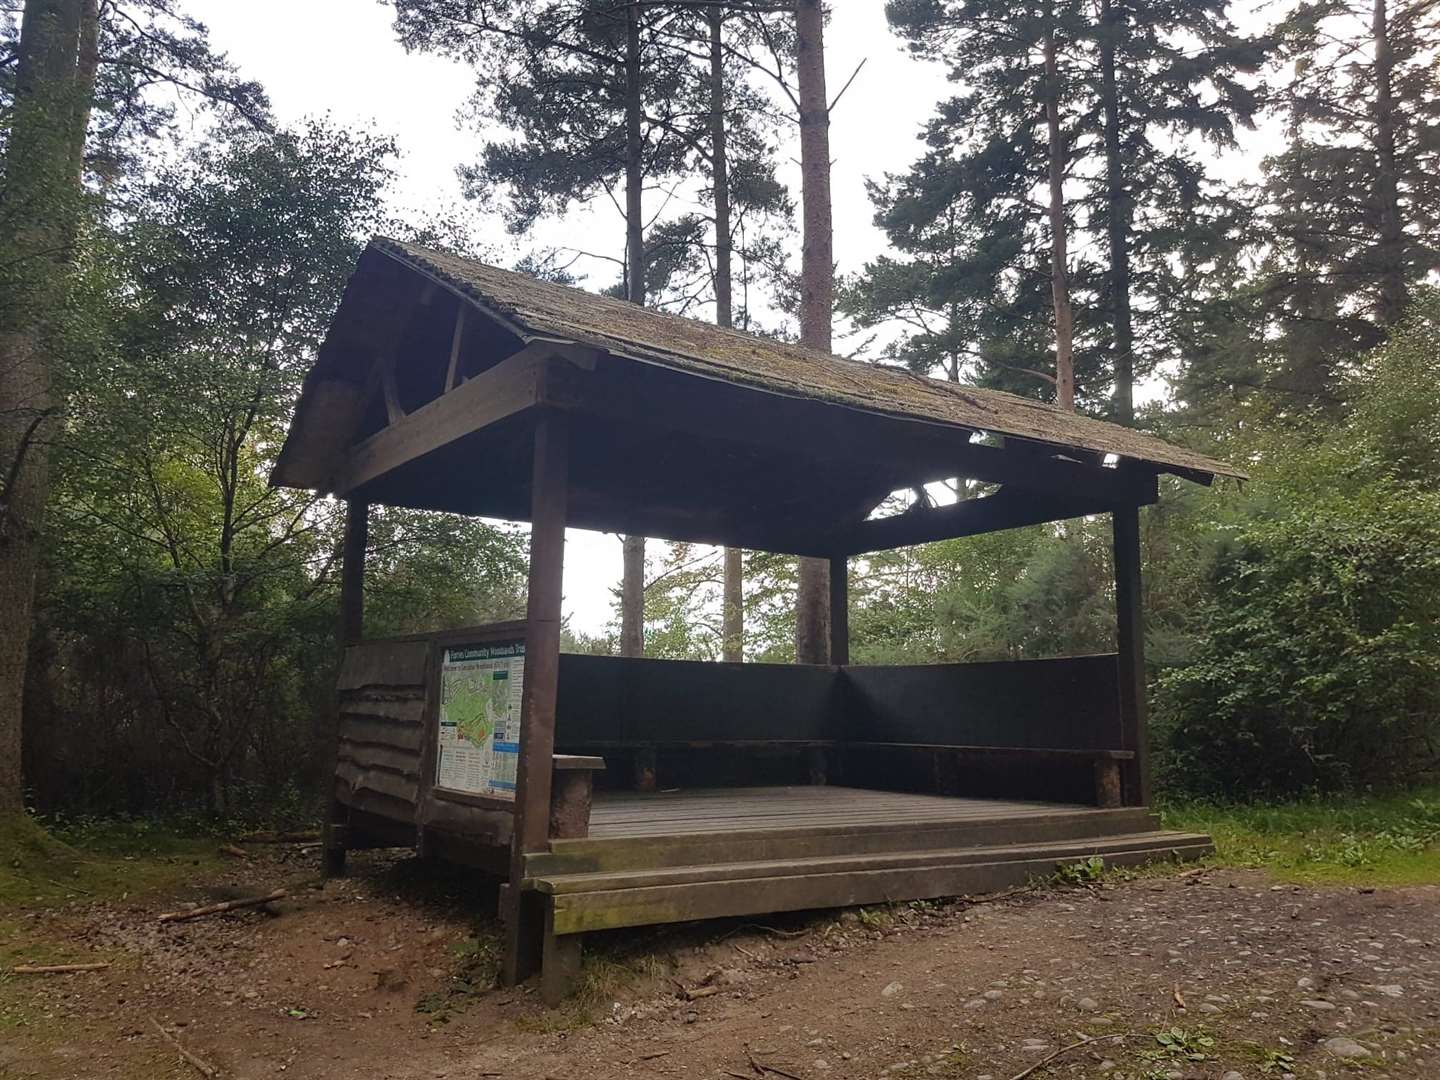 The hut at Sanquhar bike trails.